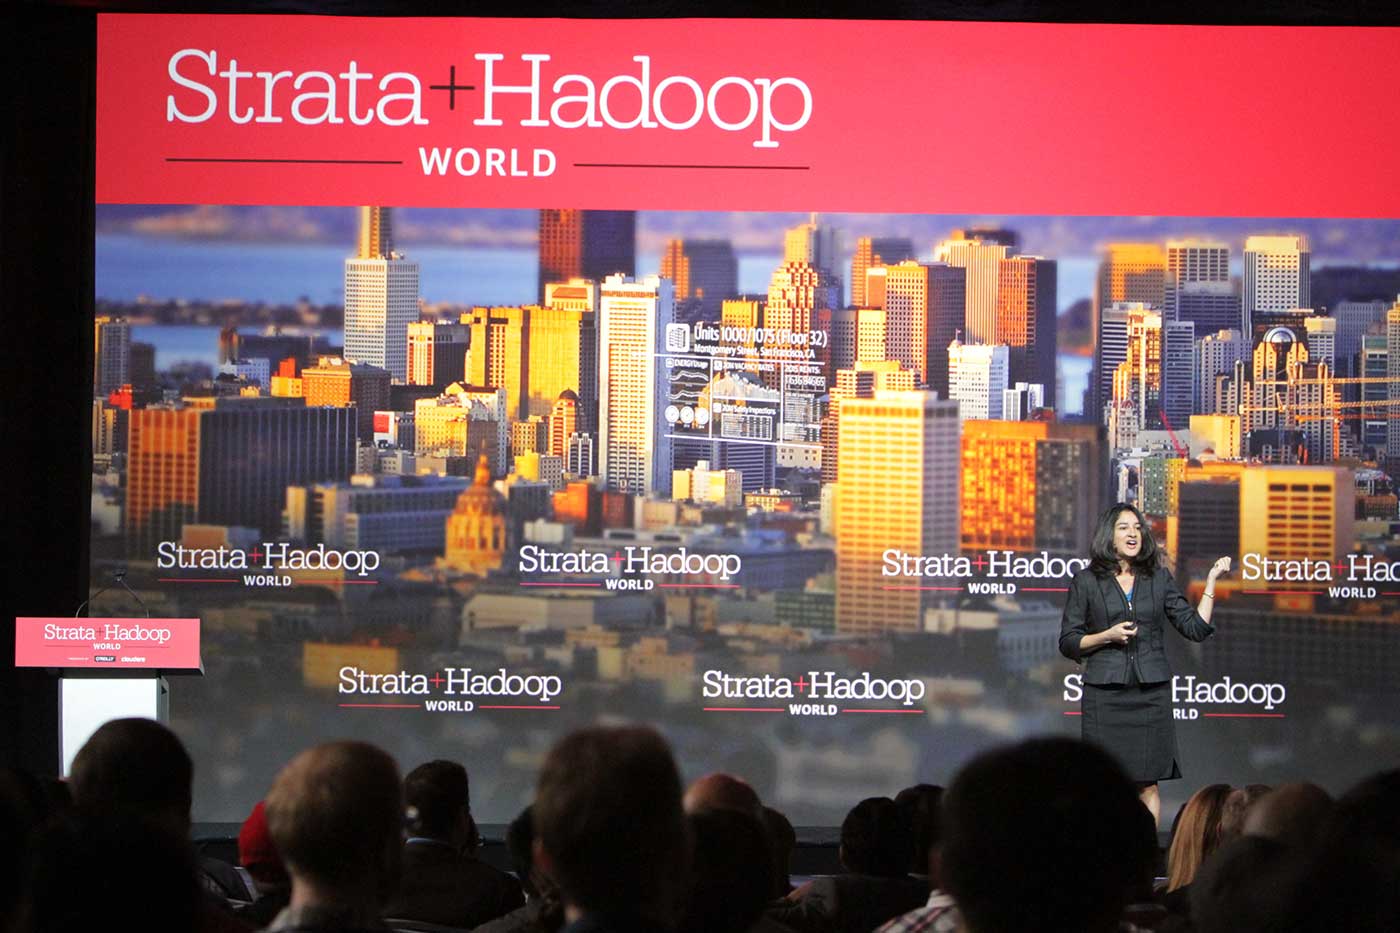 Strata + Hadoop World keynote stage.